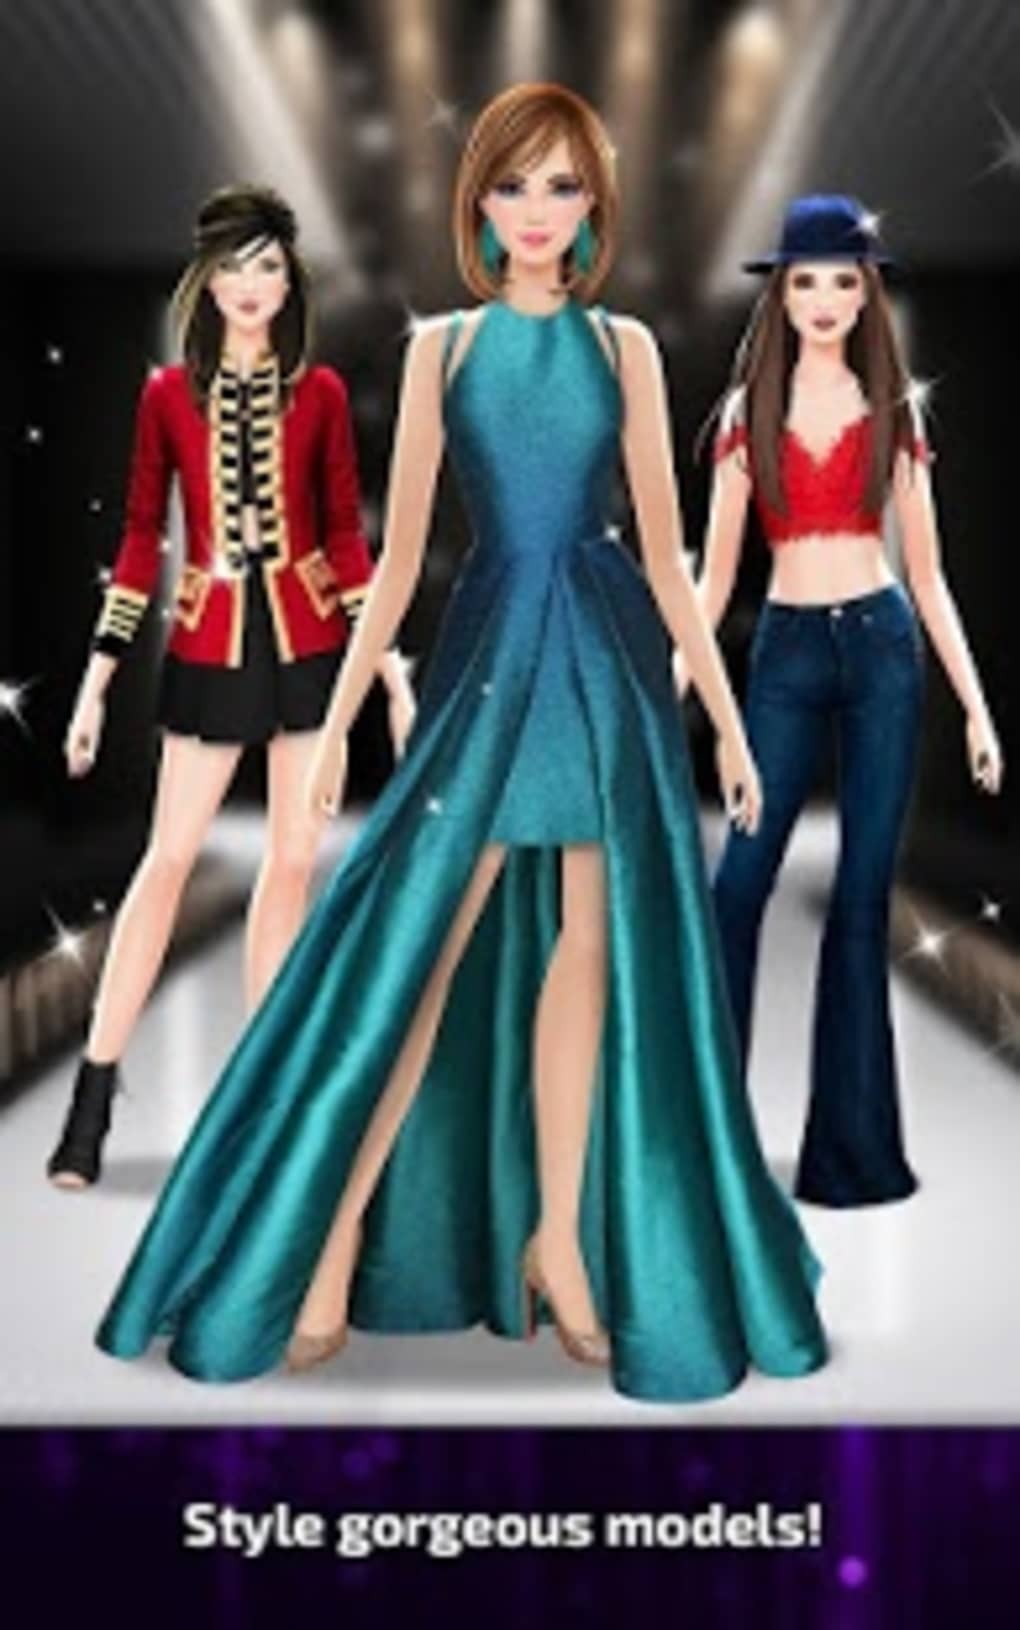 Baixar International Fashion Stylist - Dress Up Games [v5.5] APK